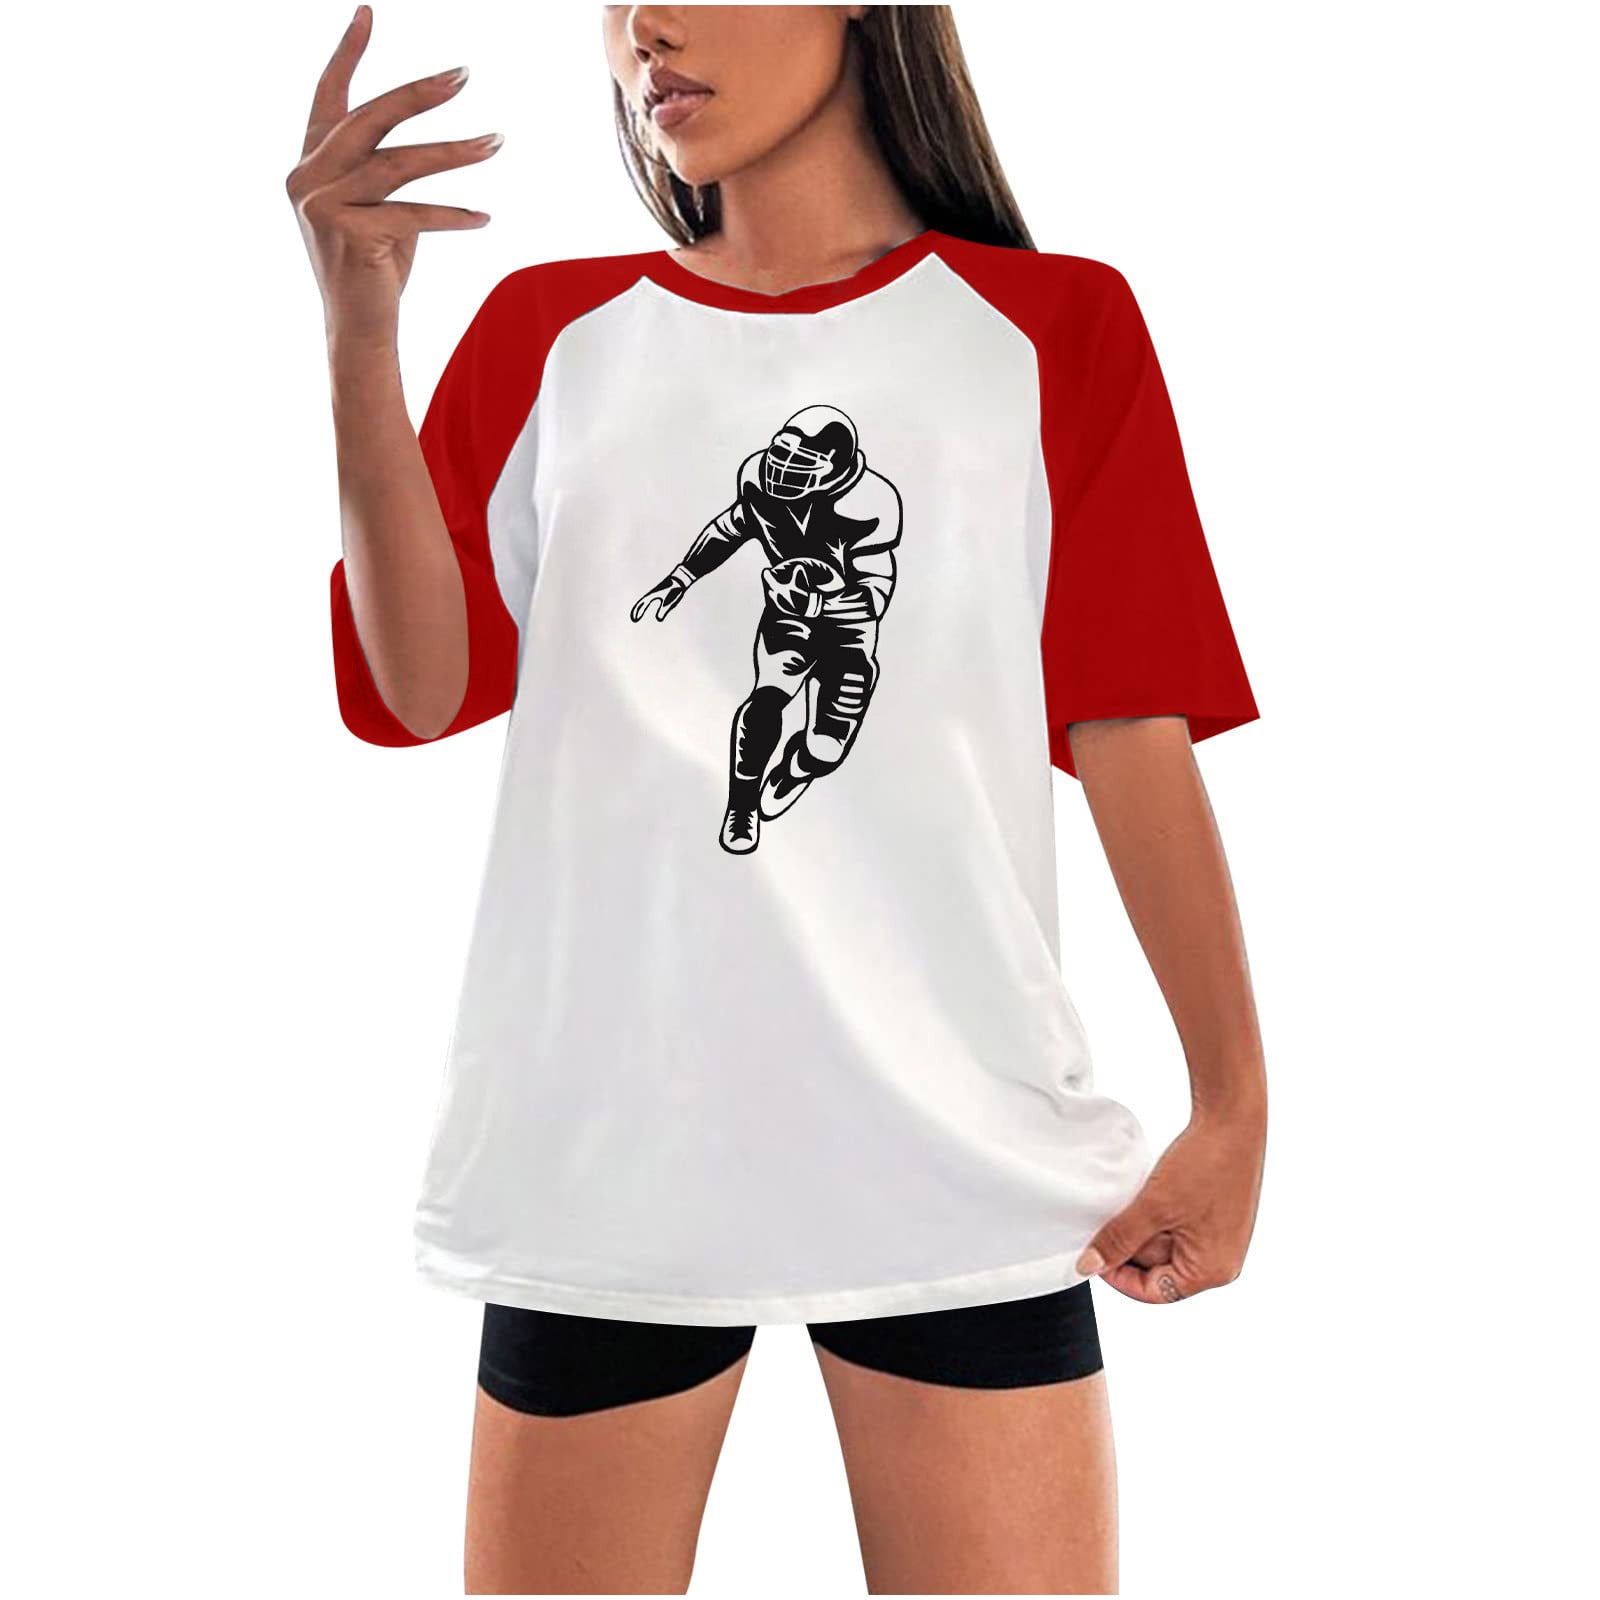 Lastesso Women Aesthetic Baseball Print Shirts Short Sleeve